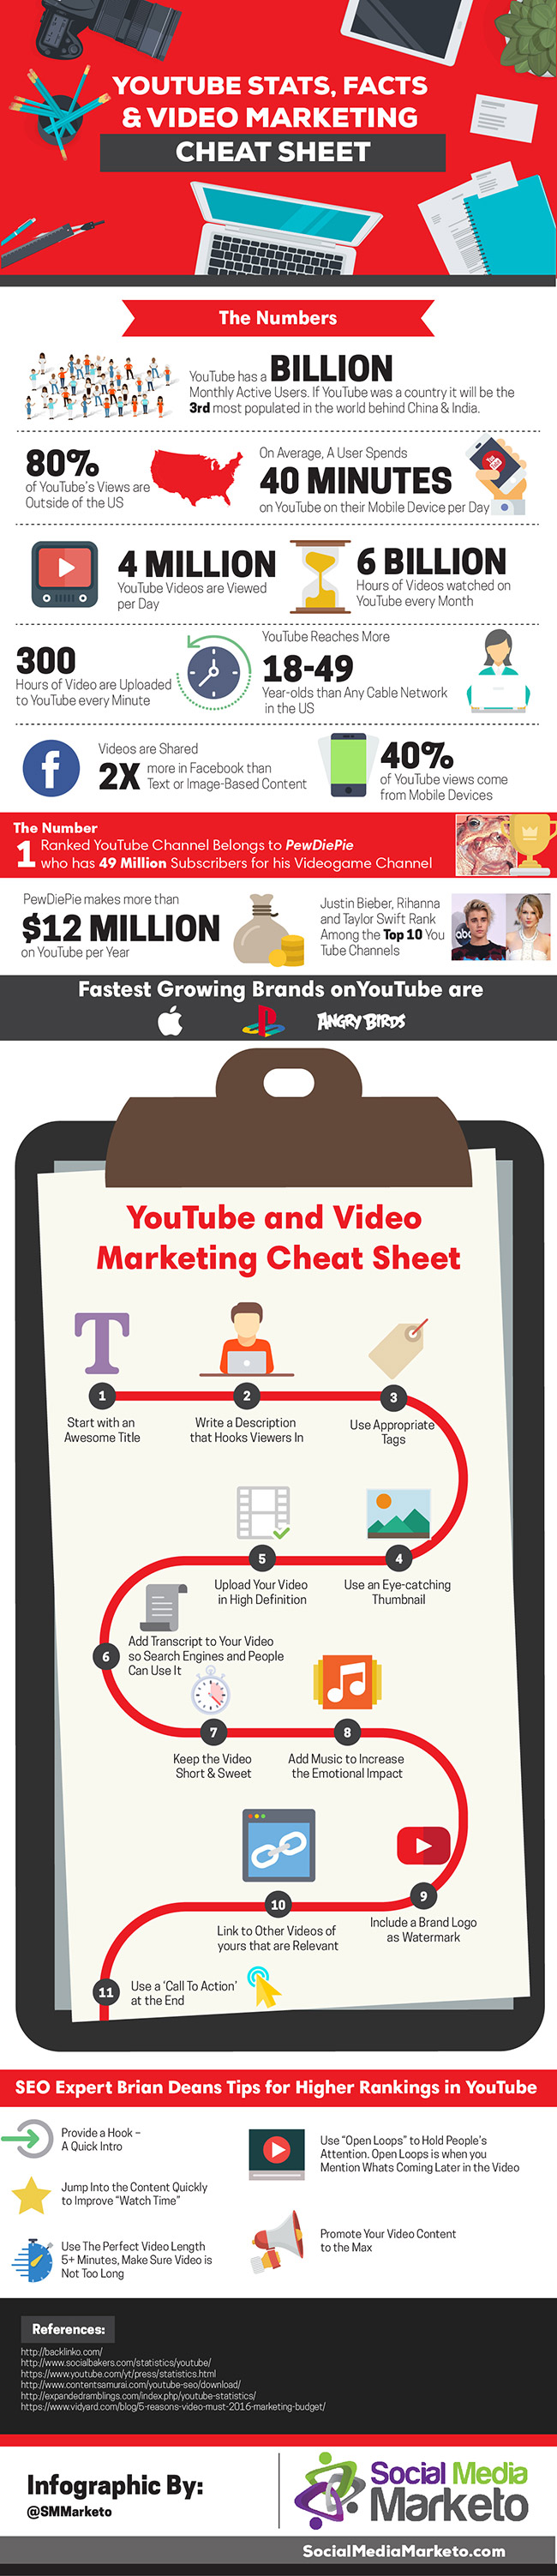 YouTube Marketing Cheat Sheet